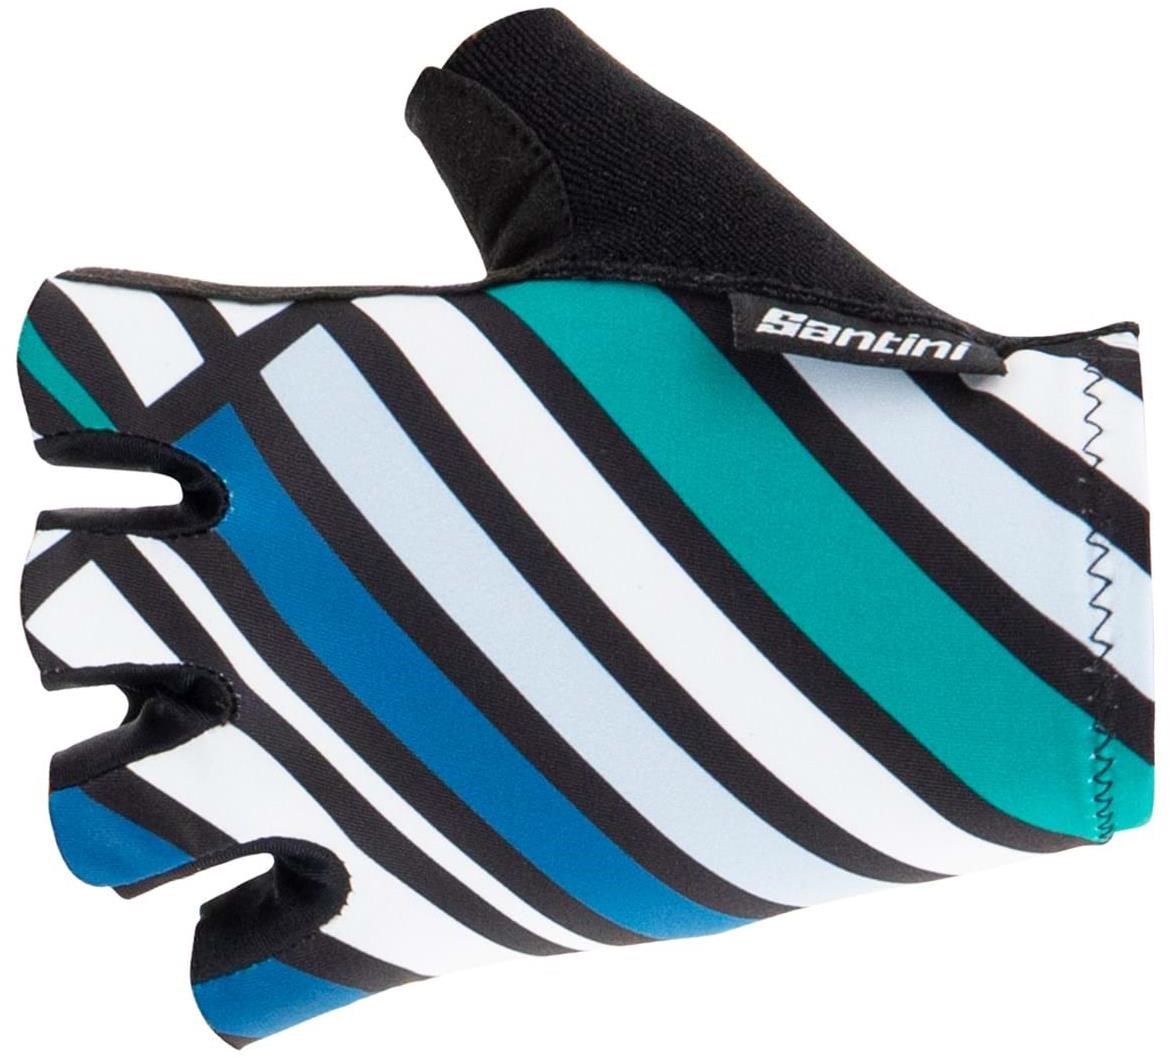 Santini Raggio Cycling Gloves product image